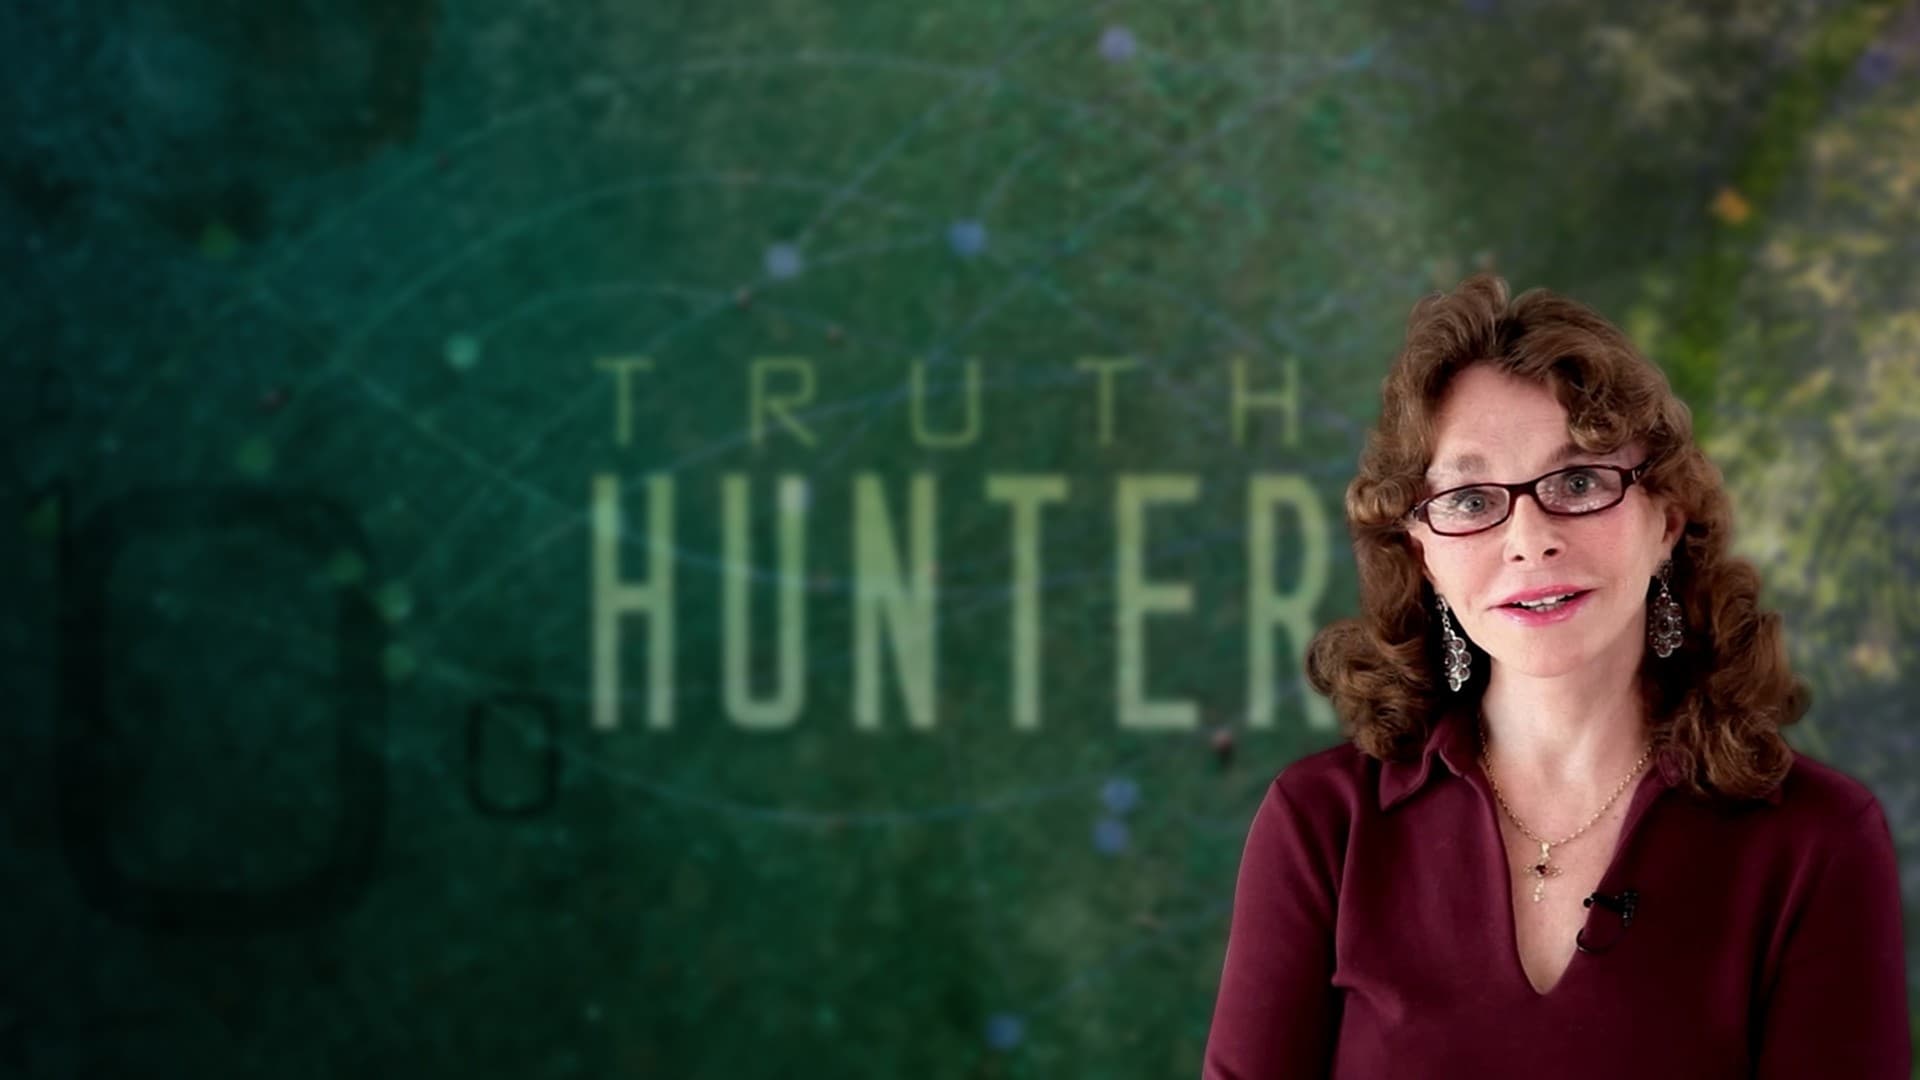 Watch Truth Hunter Online